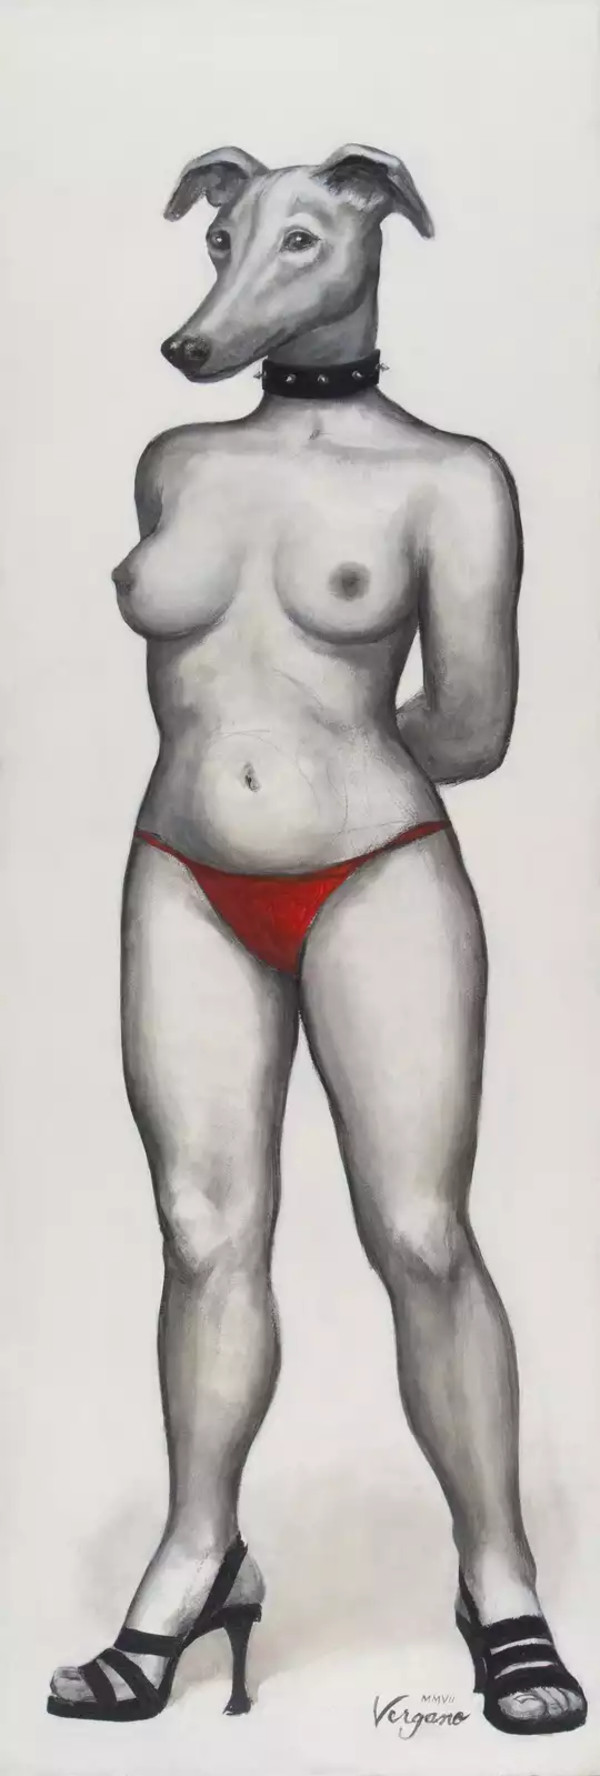 Bitch, 2007 by Cristina Vergano